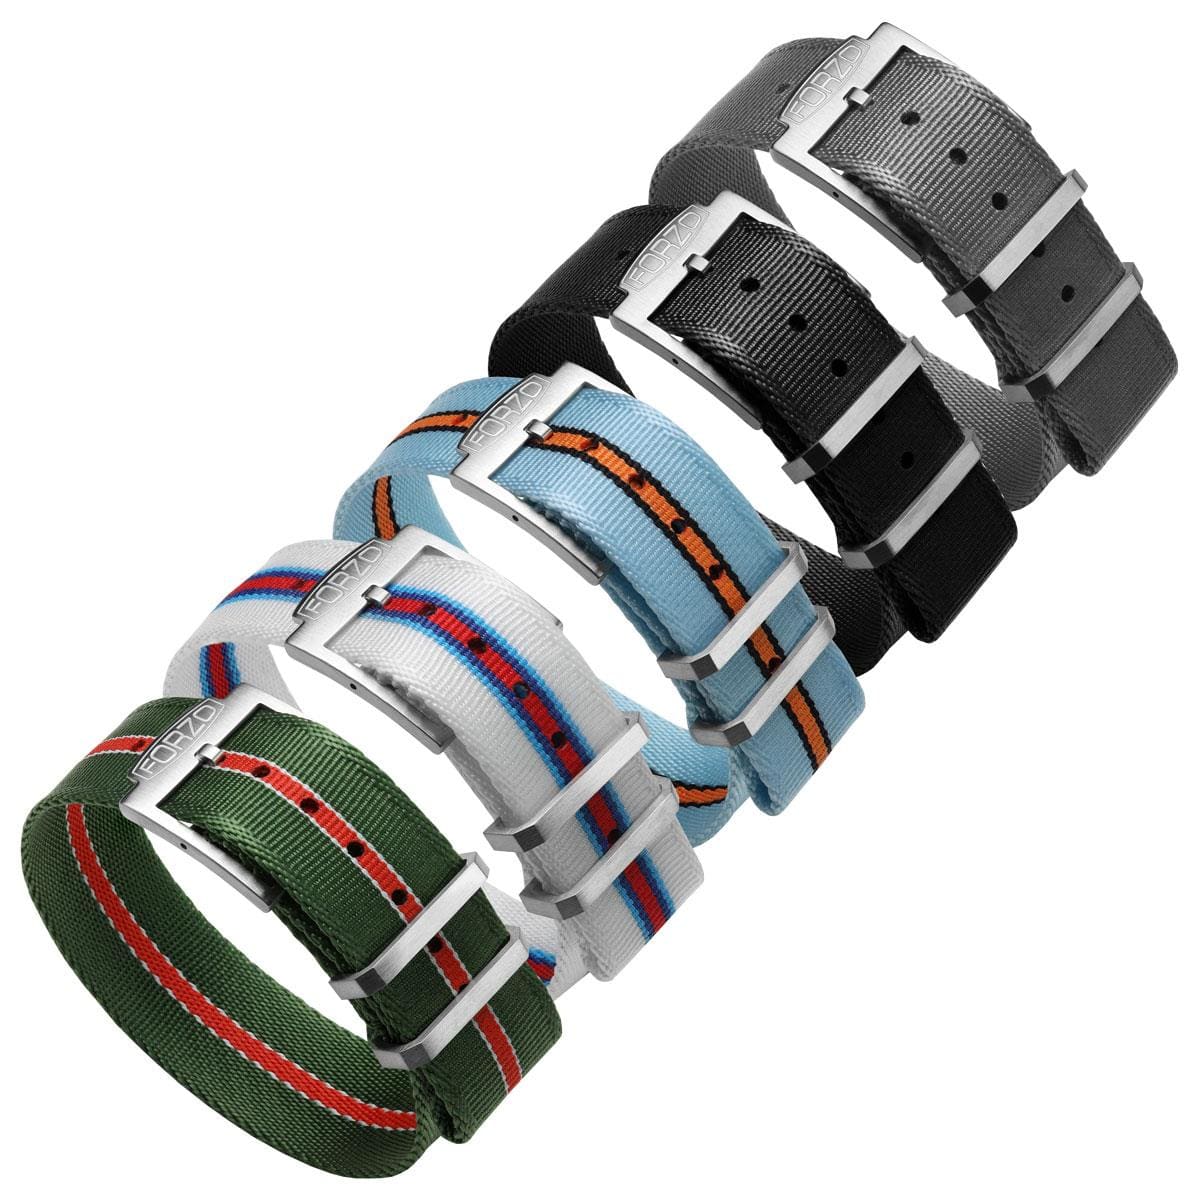 FORZO Racing Single-Pass Nylon Watch Strap - Green with Racing Stripes